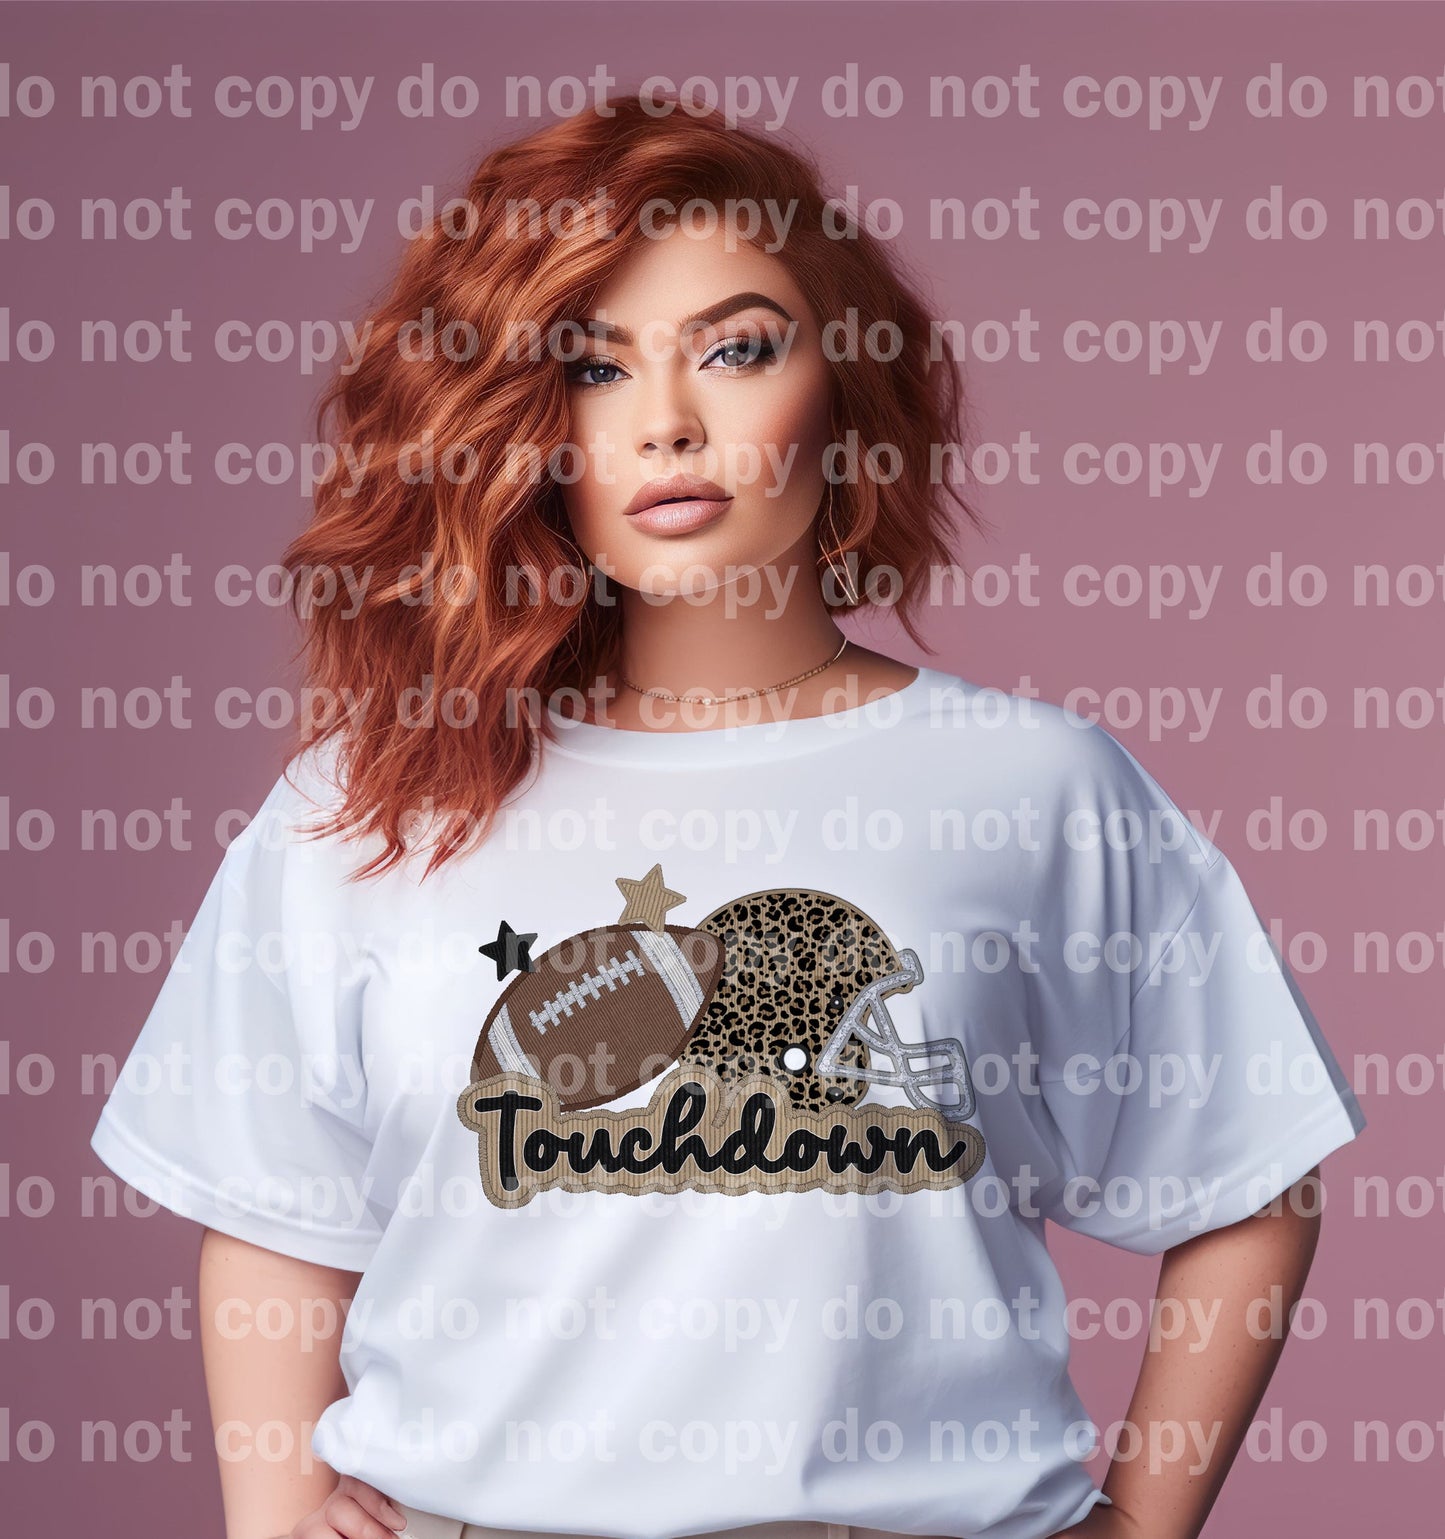 Touchdown Cheetah Football Embroidery Dream Print or Sublimation Print